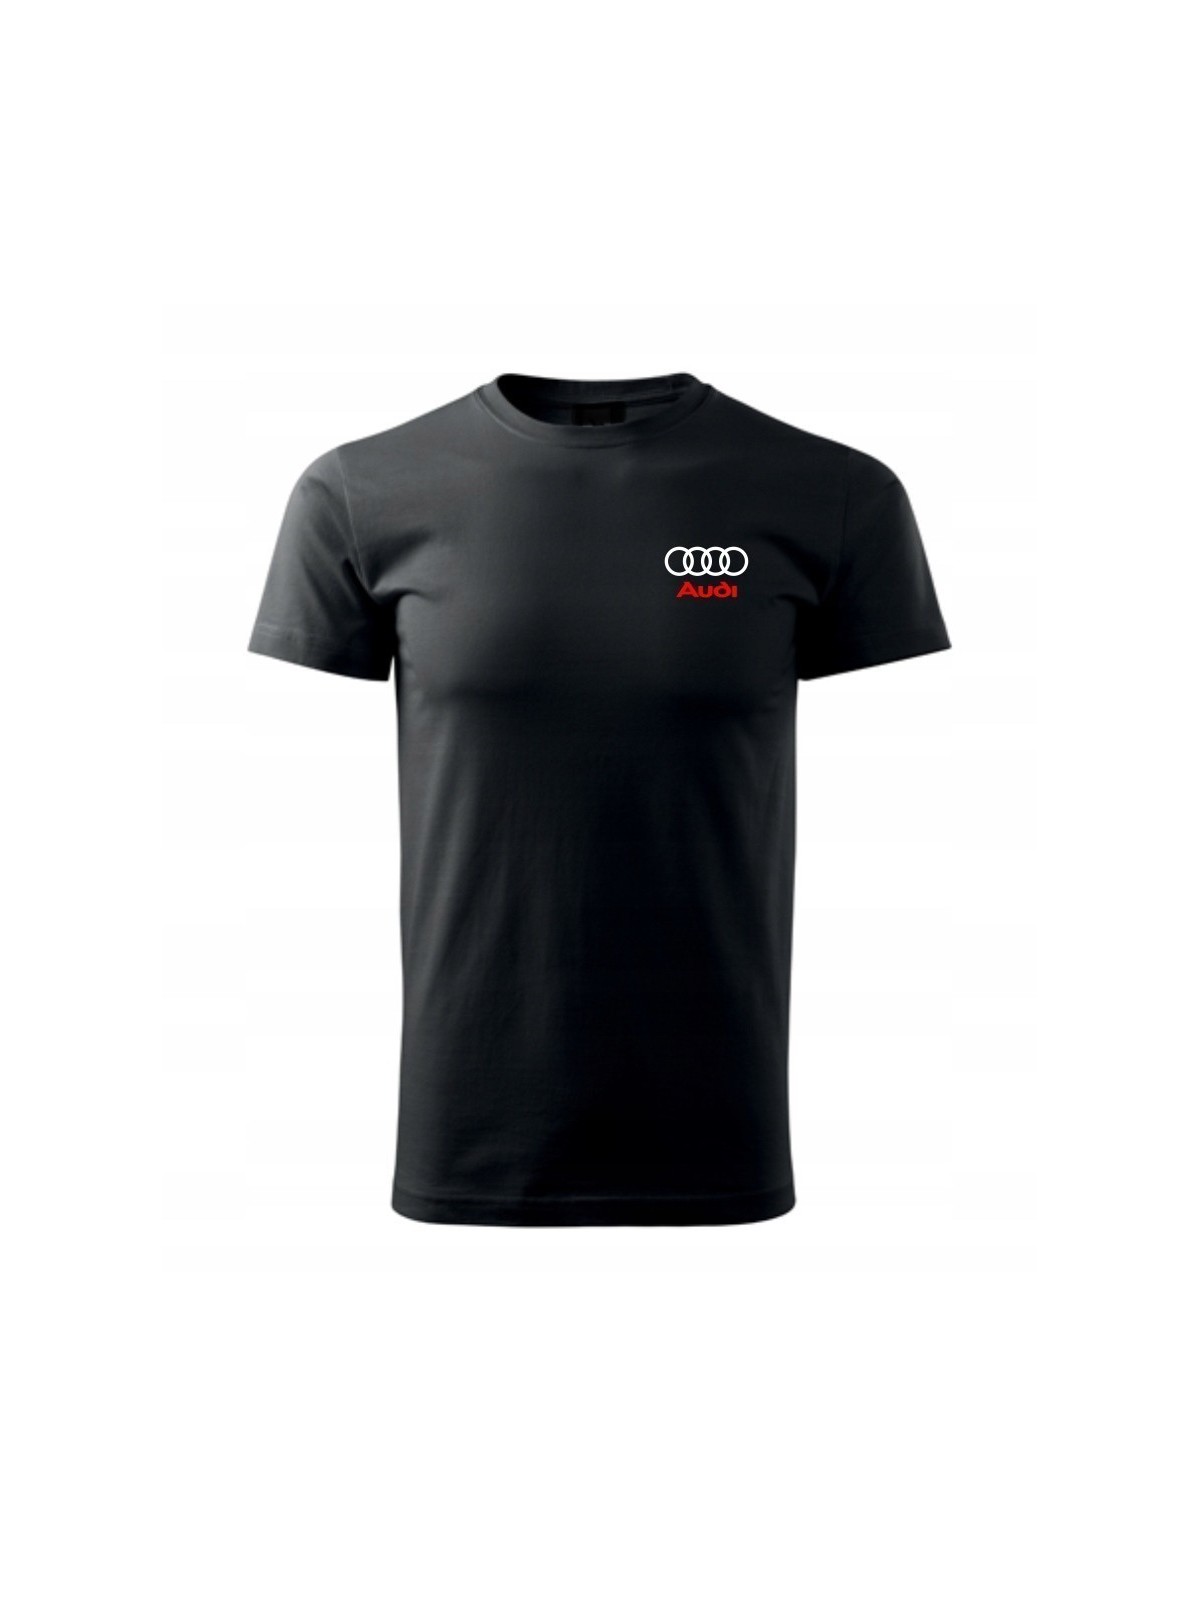 T-shirt Audi małe logo